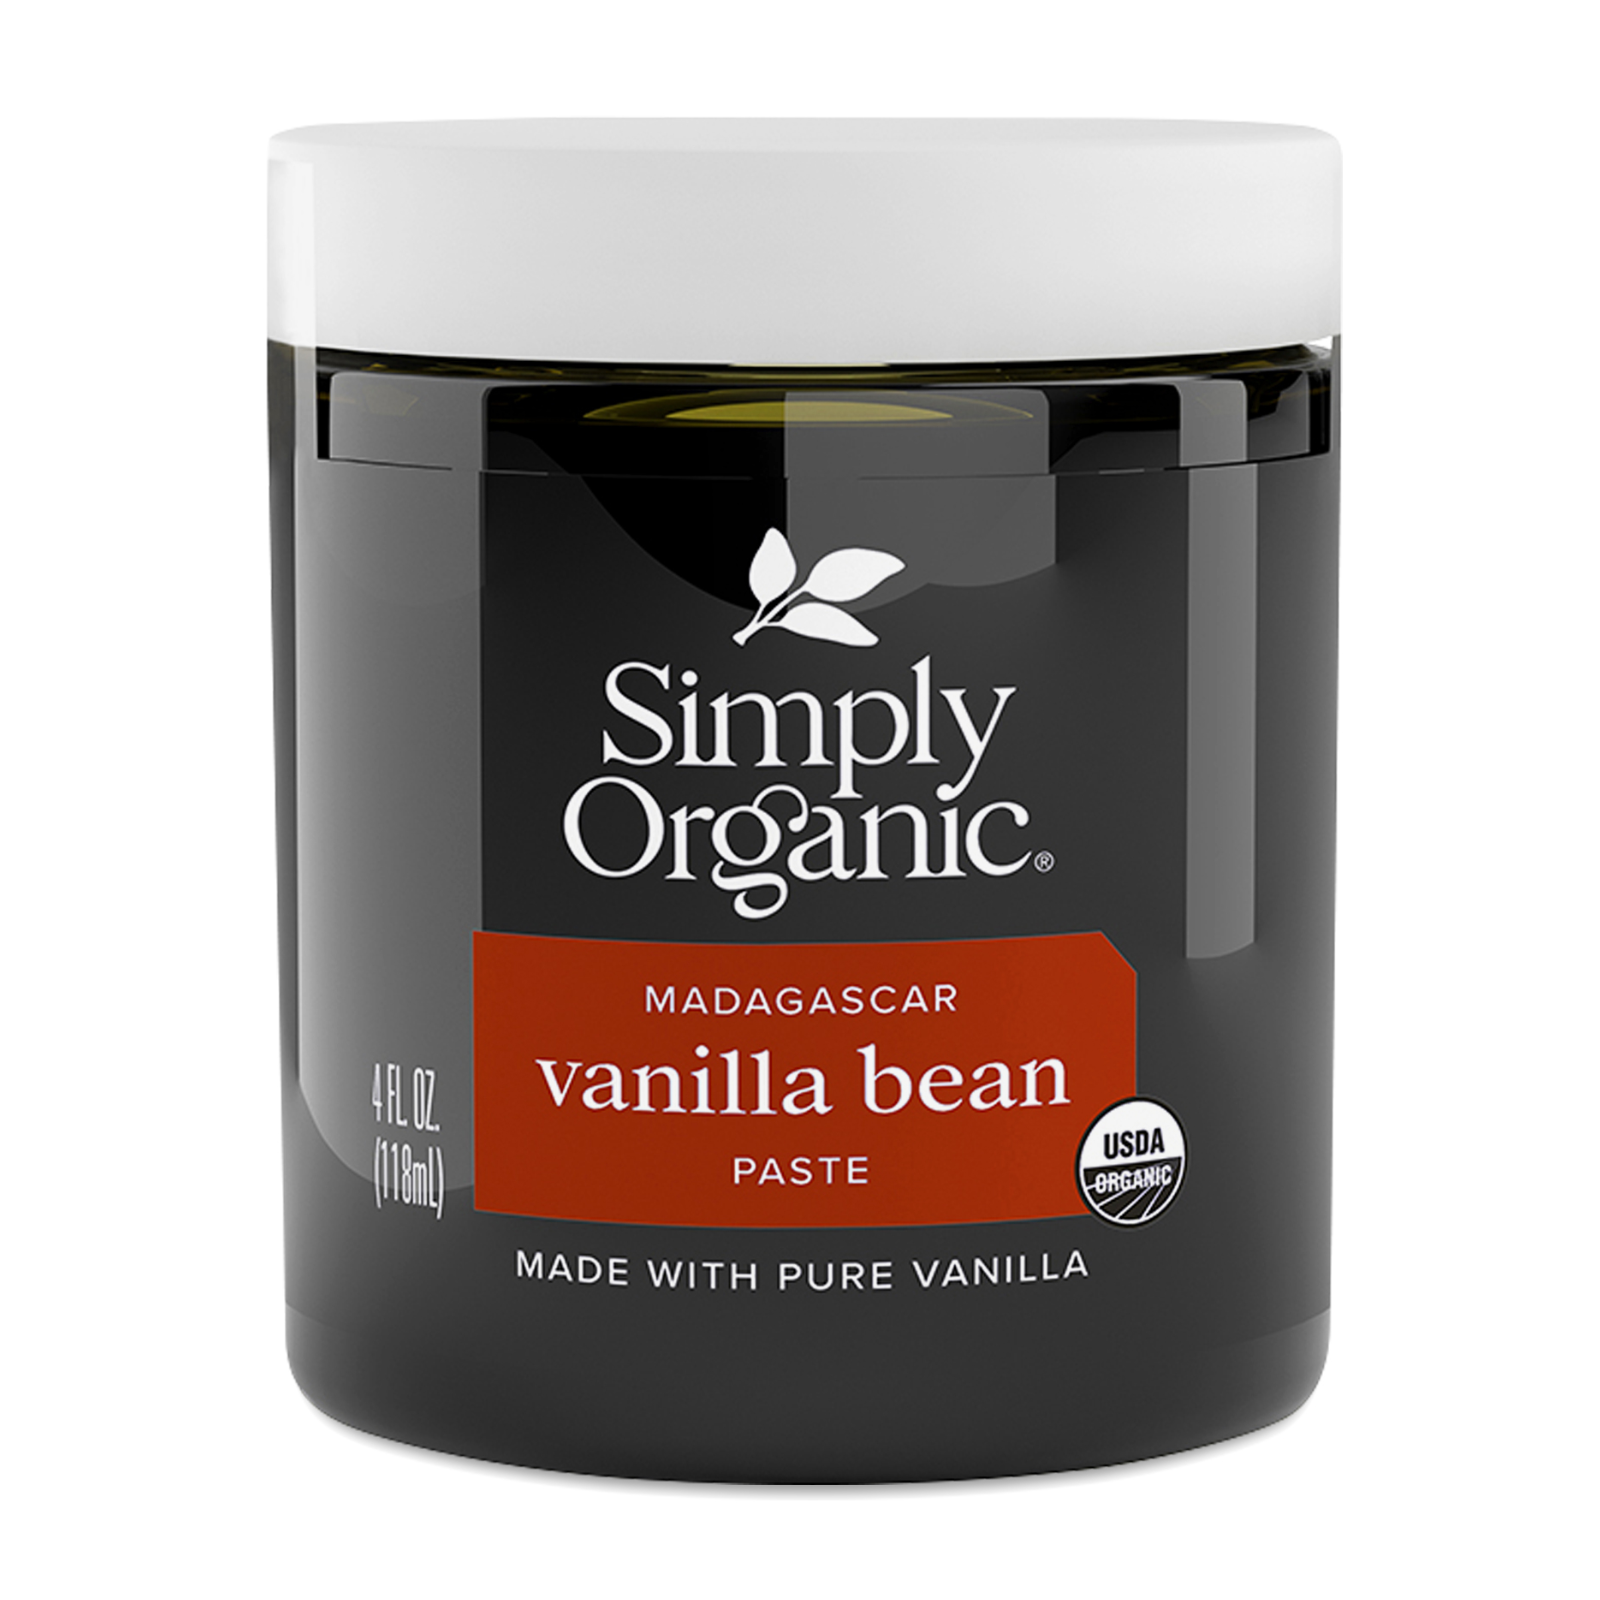 Simply Organic Madagascar Vanilla Bean Paste